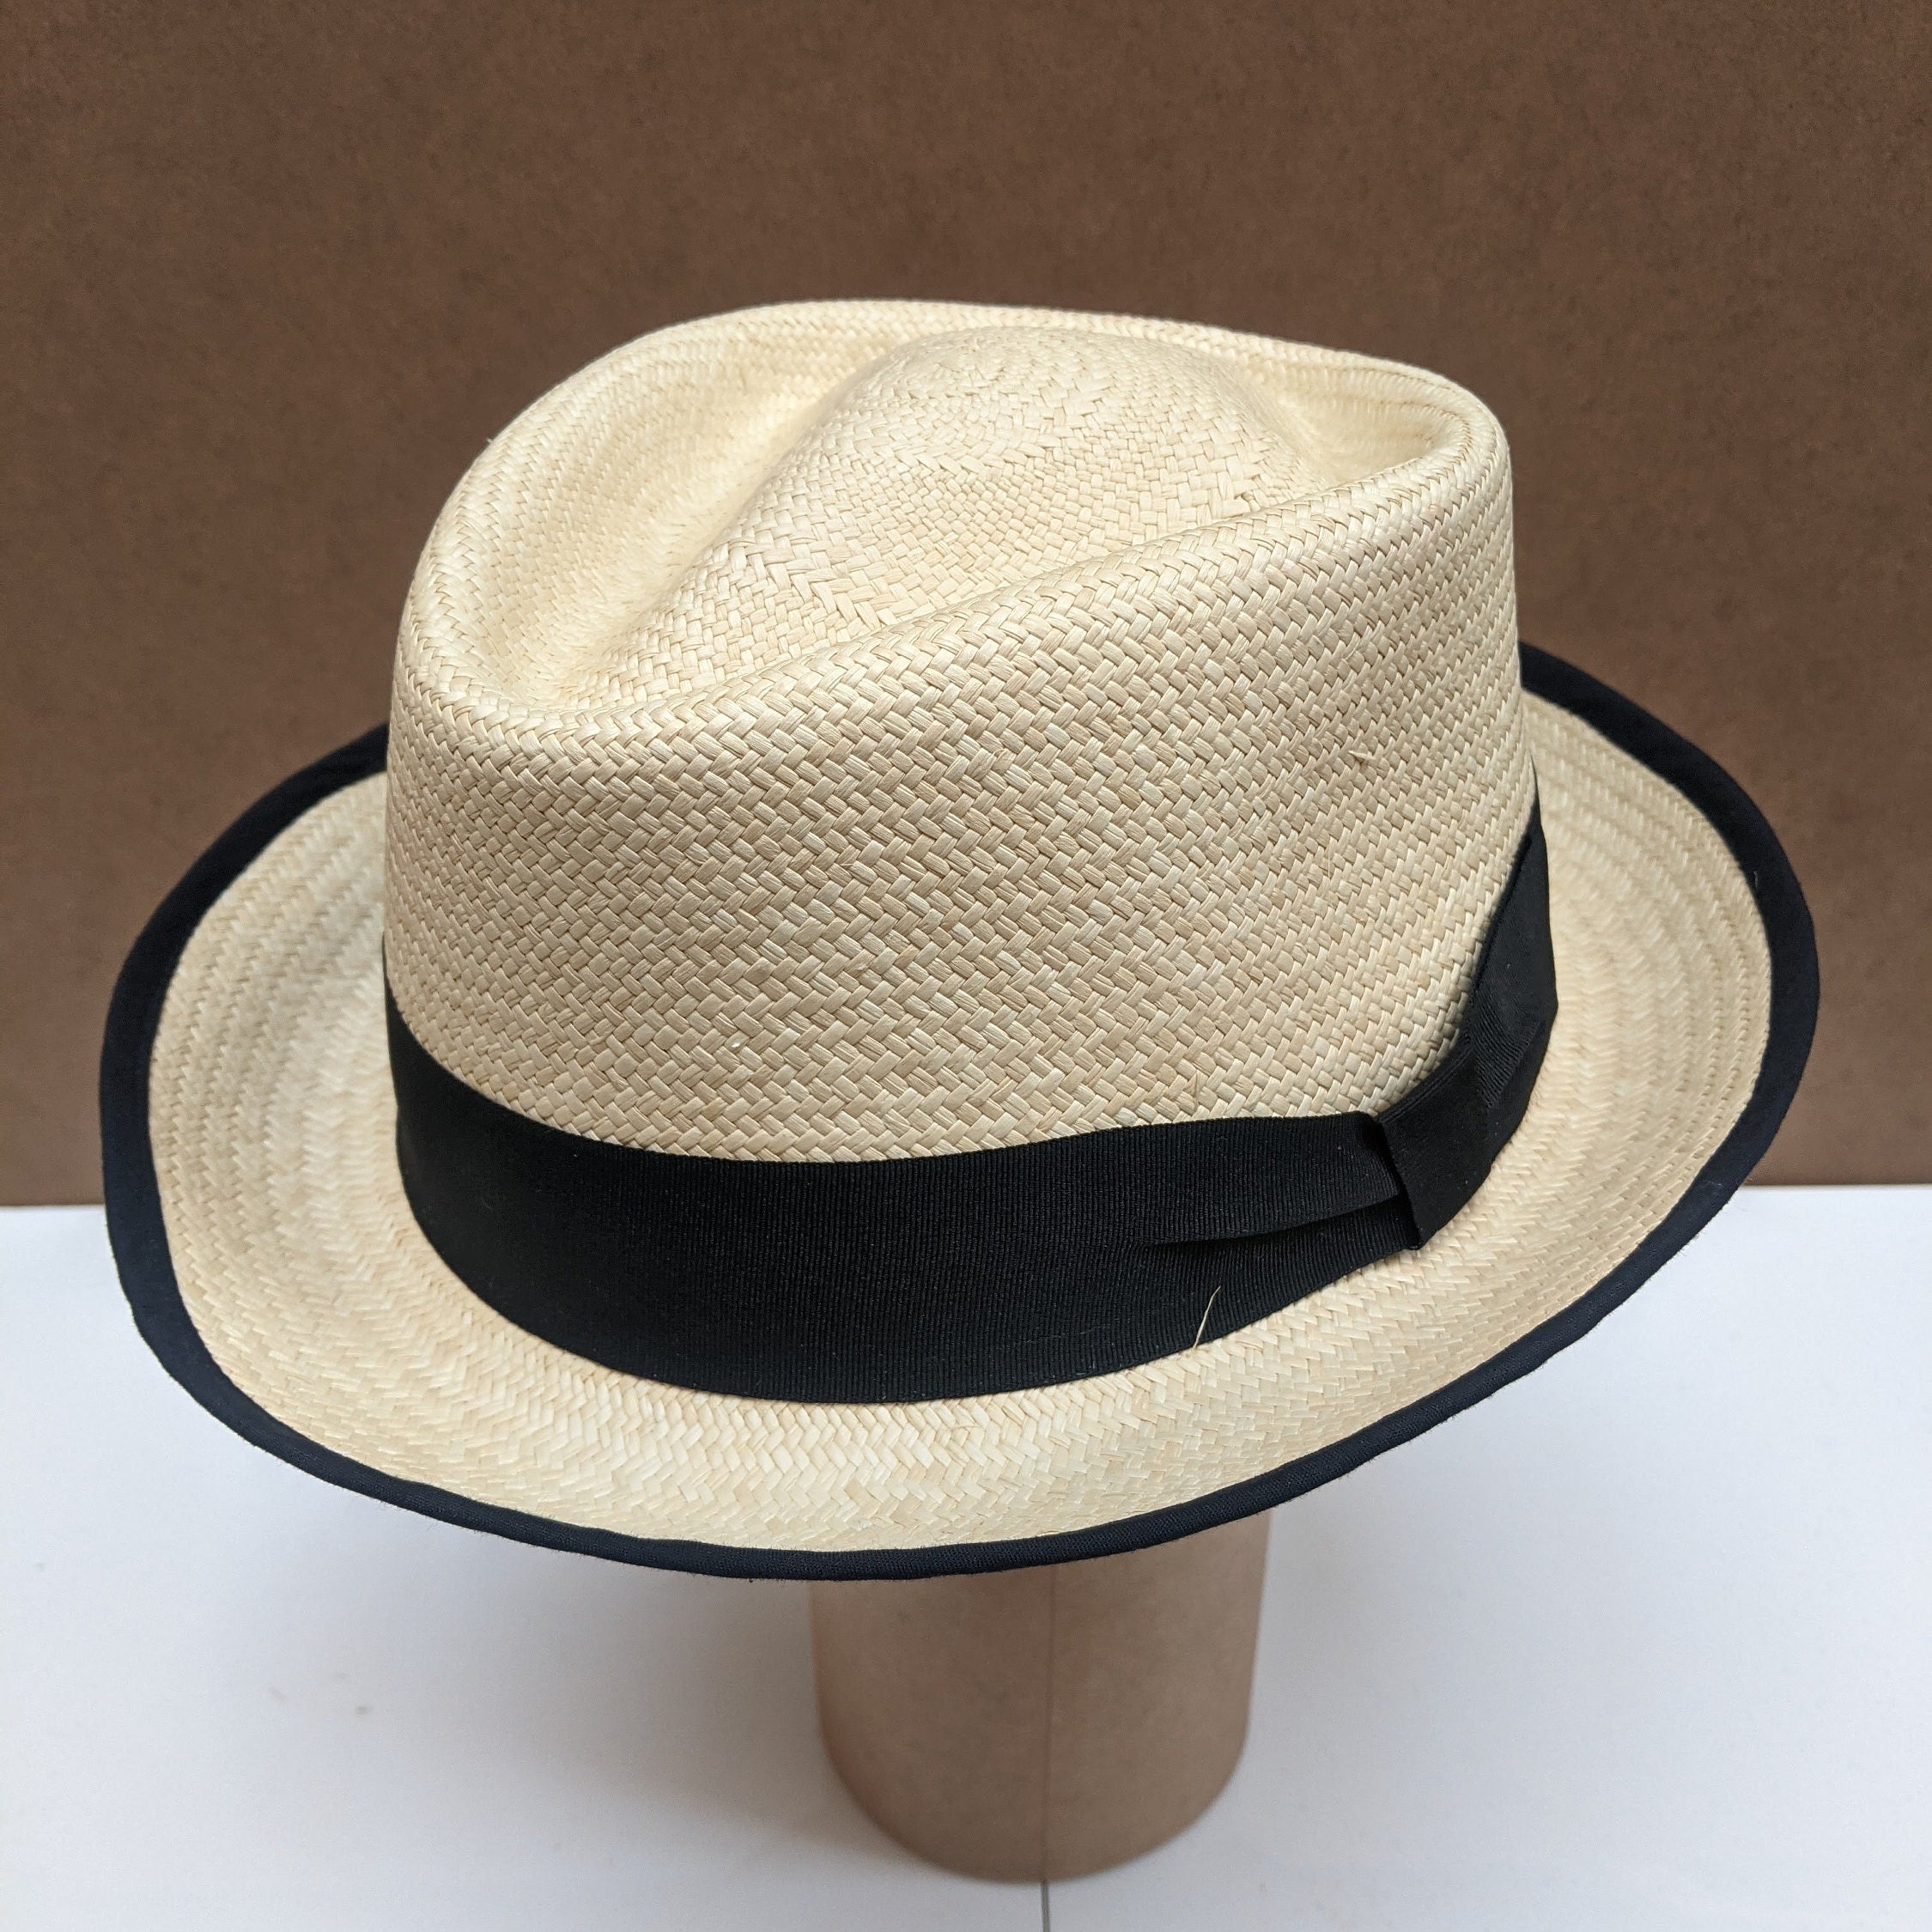 Handmade Panama Hat With Black Band and Rims Cream 57cm | Etsy